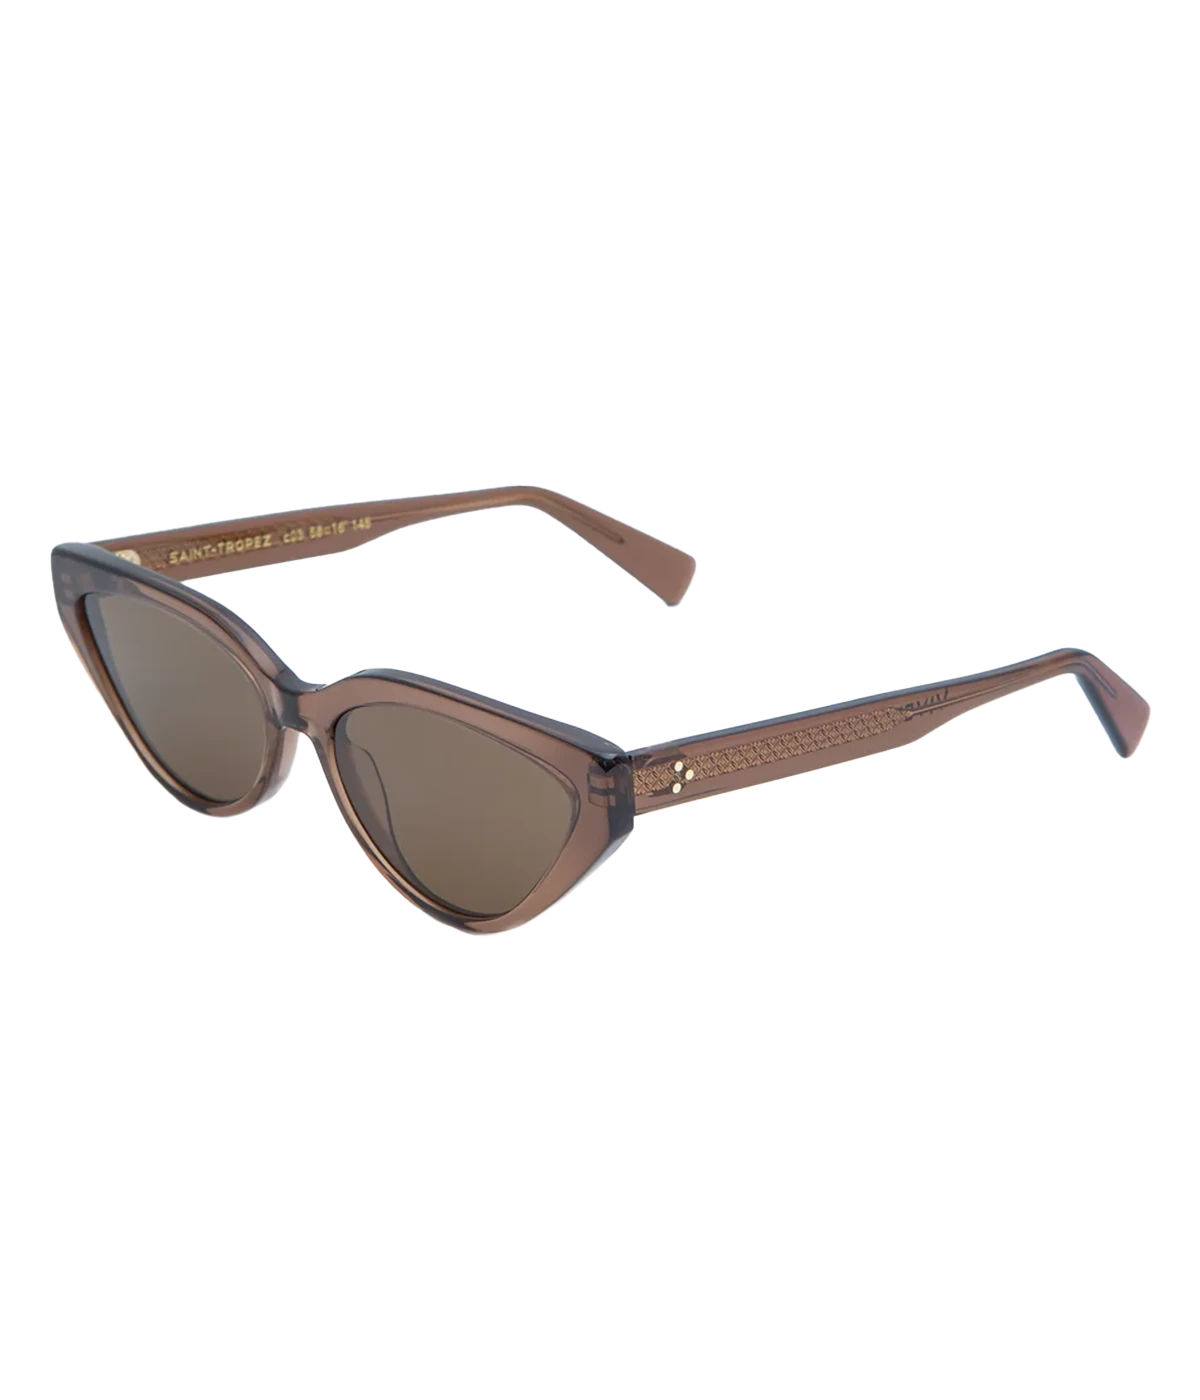 Saint Tropez Sunglasses in Brown